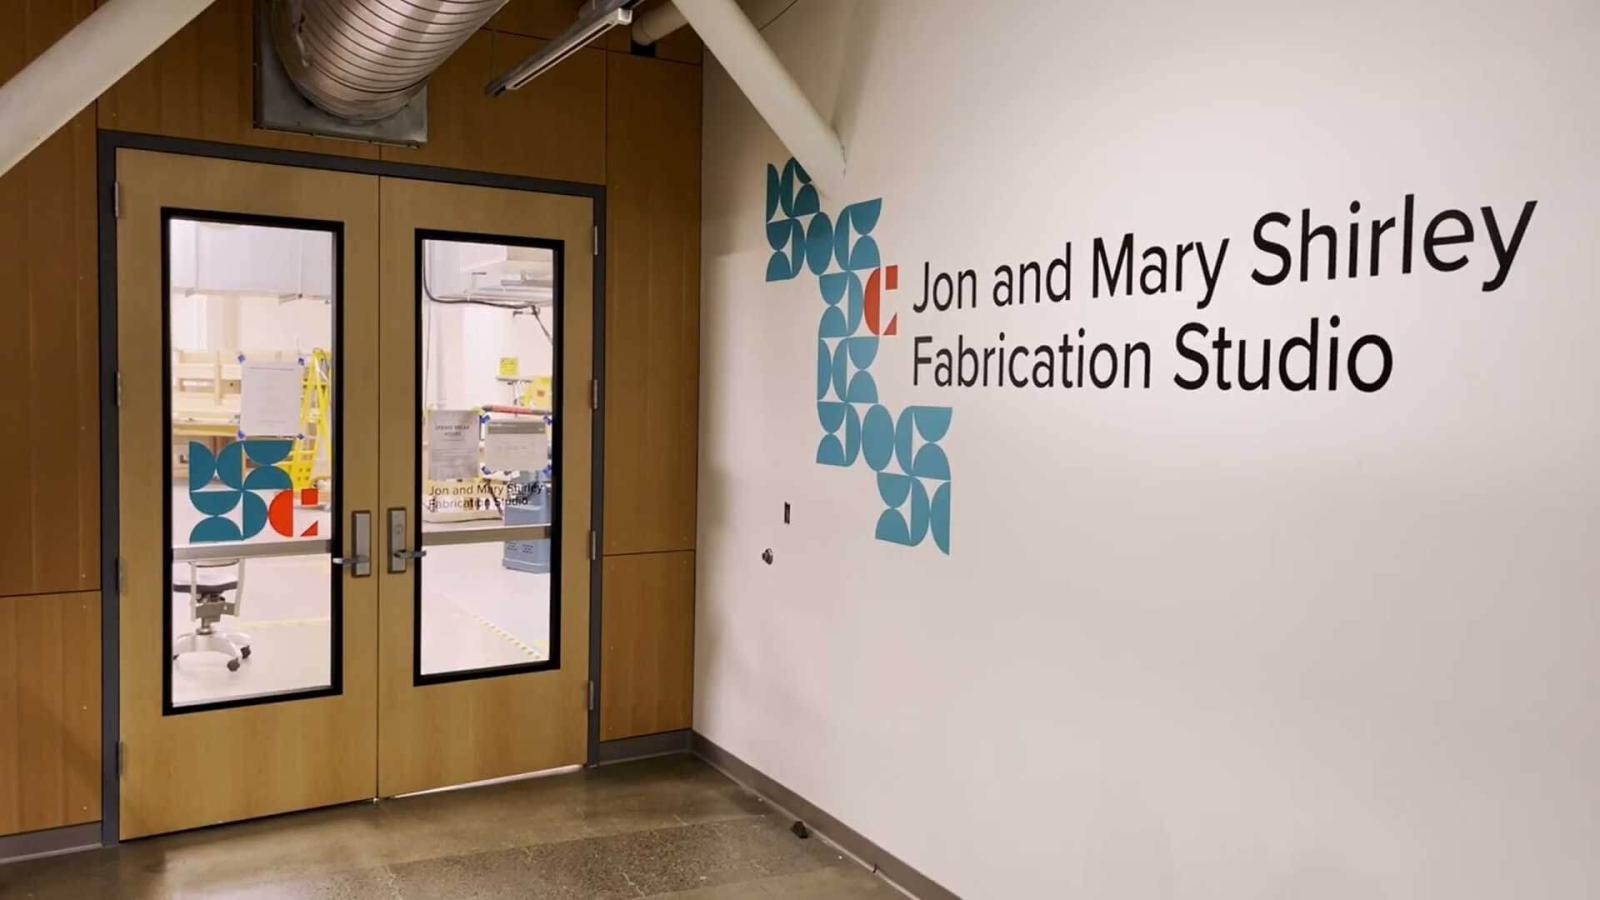 outside of fabrication studio, doors and wall text" jon and shirley fabrication studio